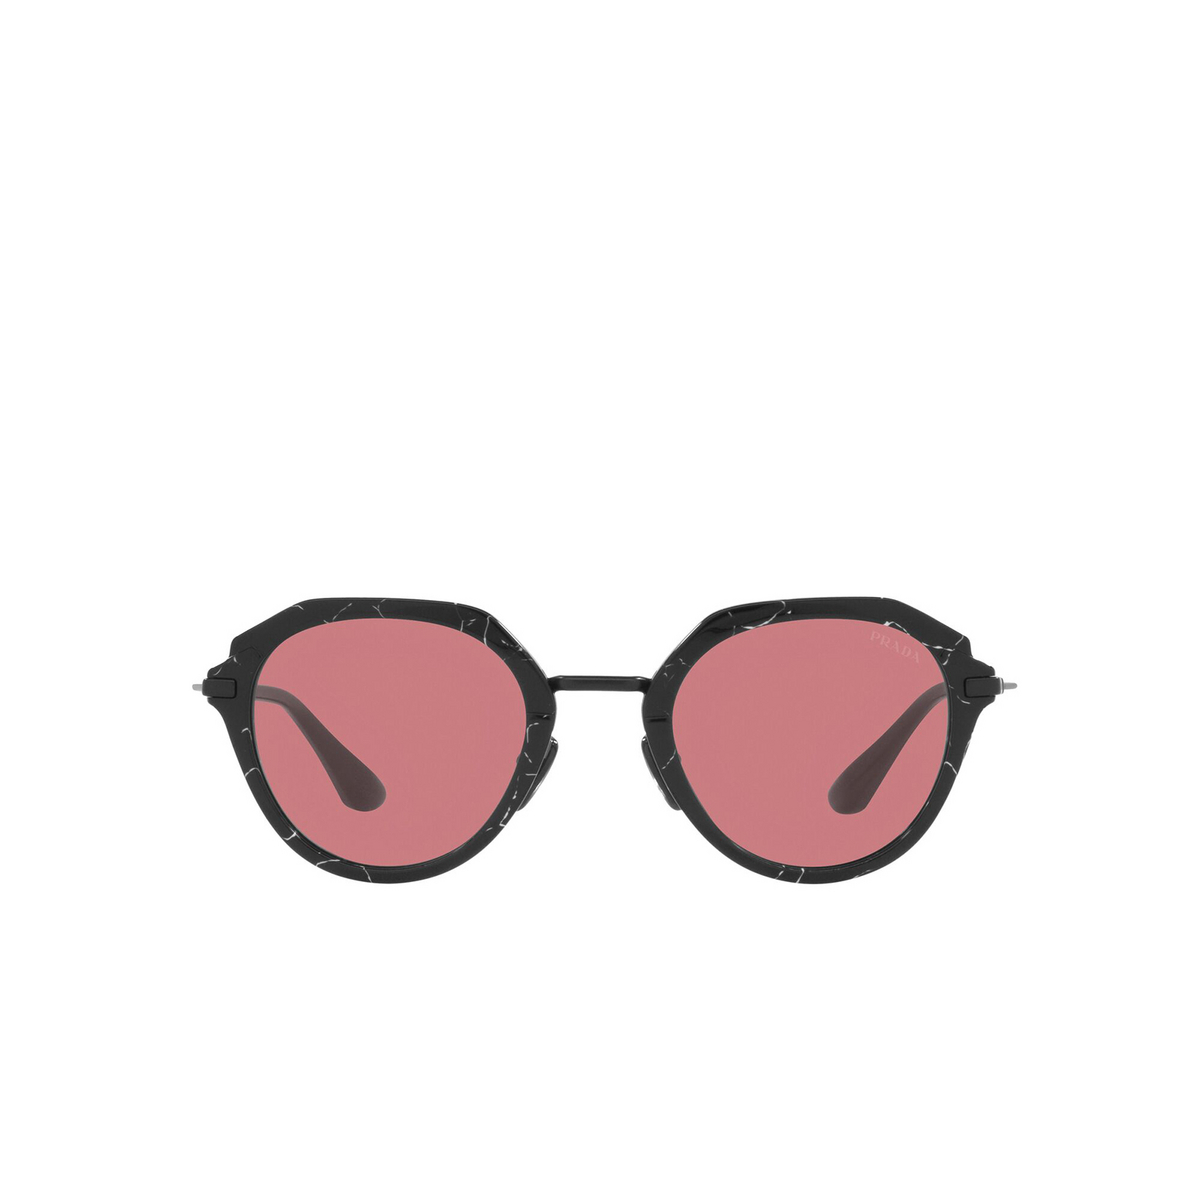 Prada® Square Sunglasses: PR 05YS color Marble Black 05W06O - front view.